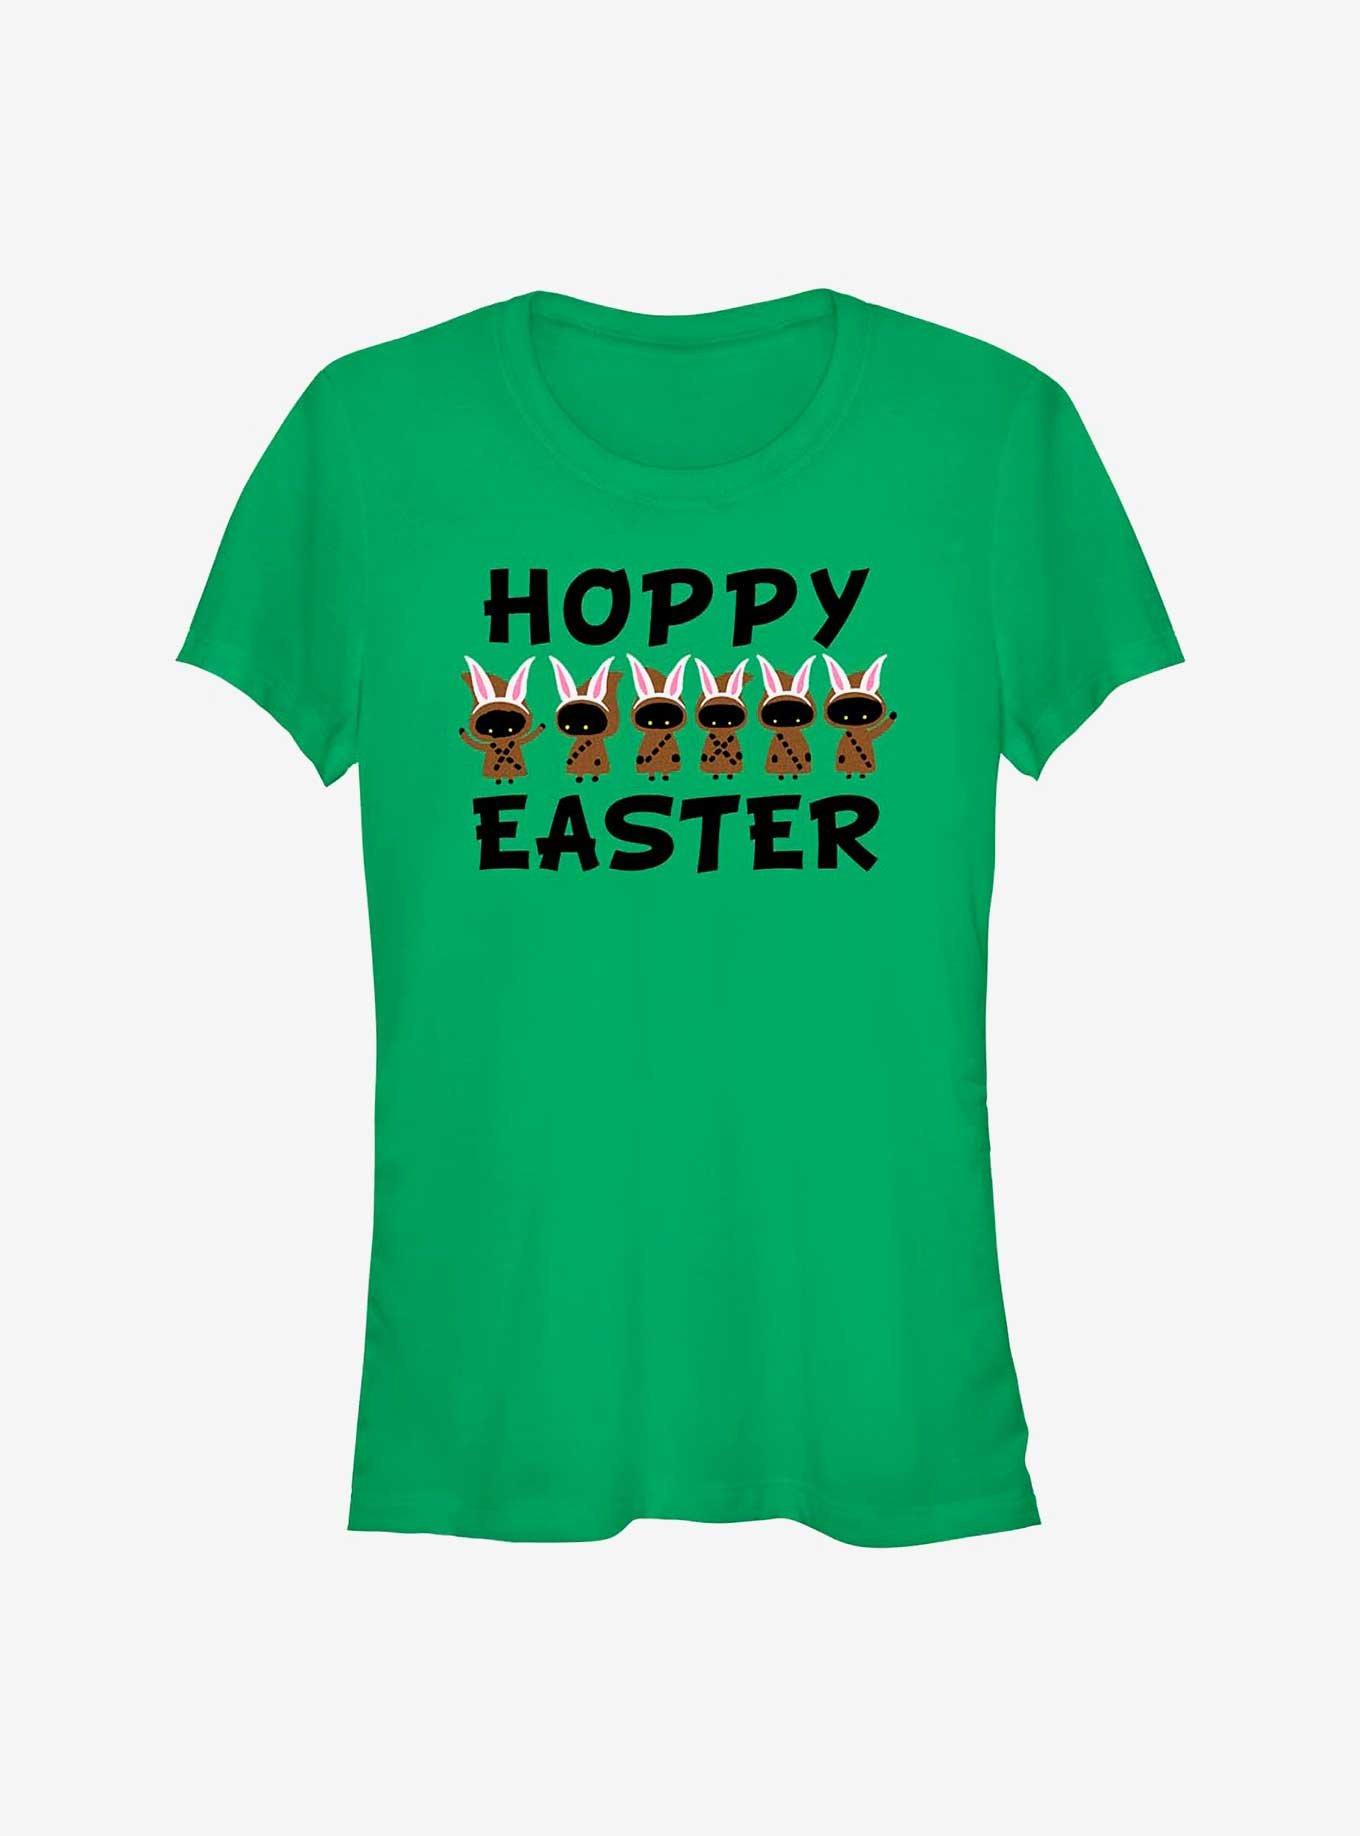 Star Wars Jawas Hoppy Easter Girls T-Shirt, KELLY, hi-res